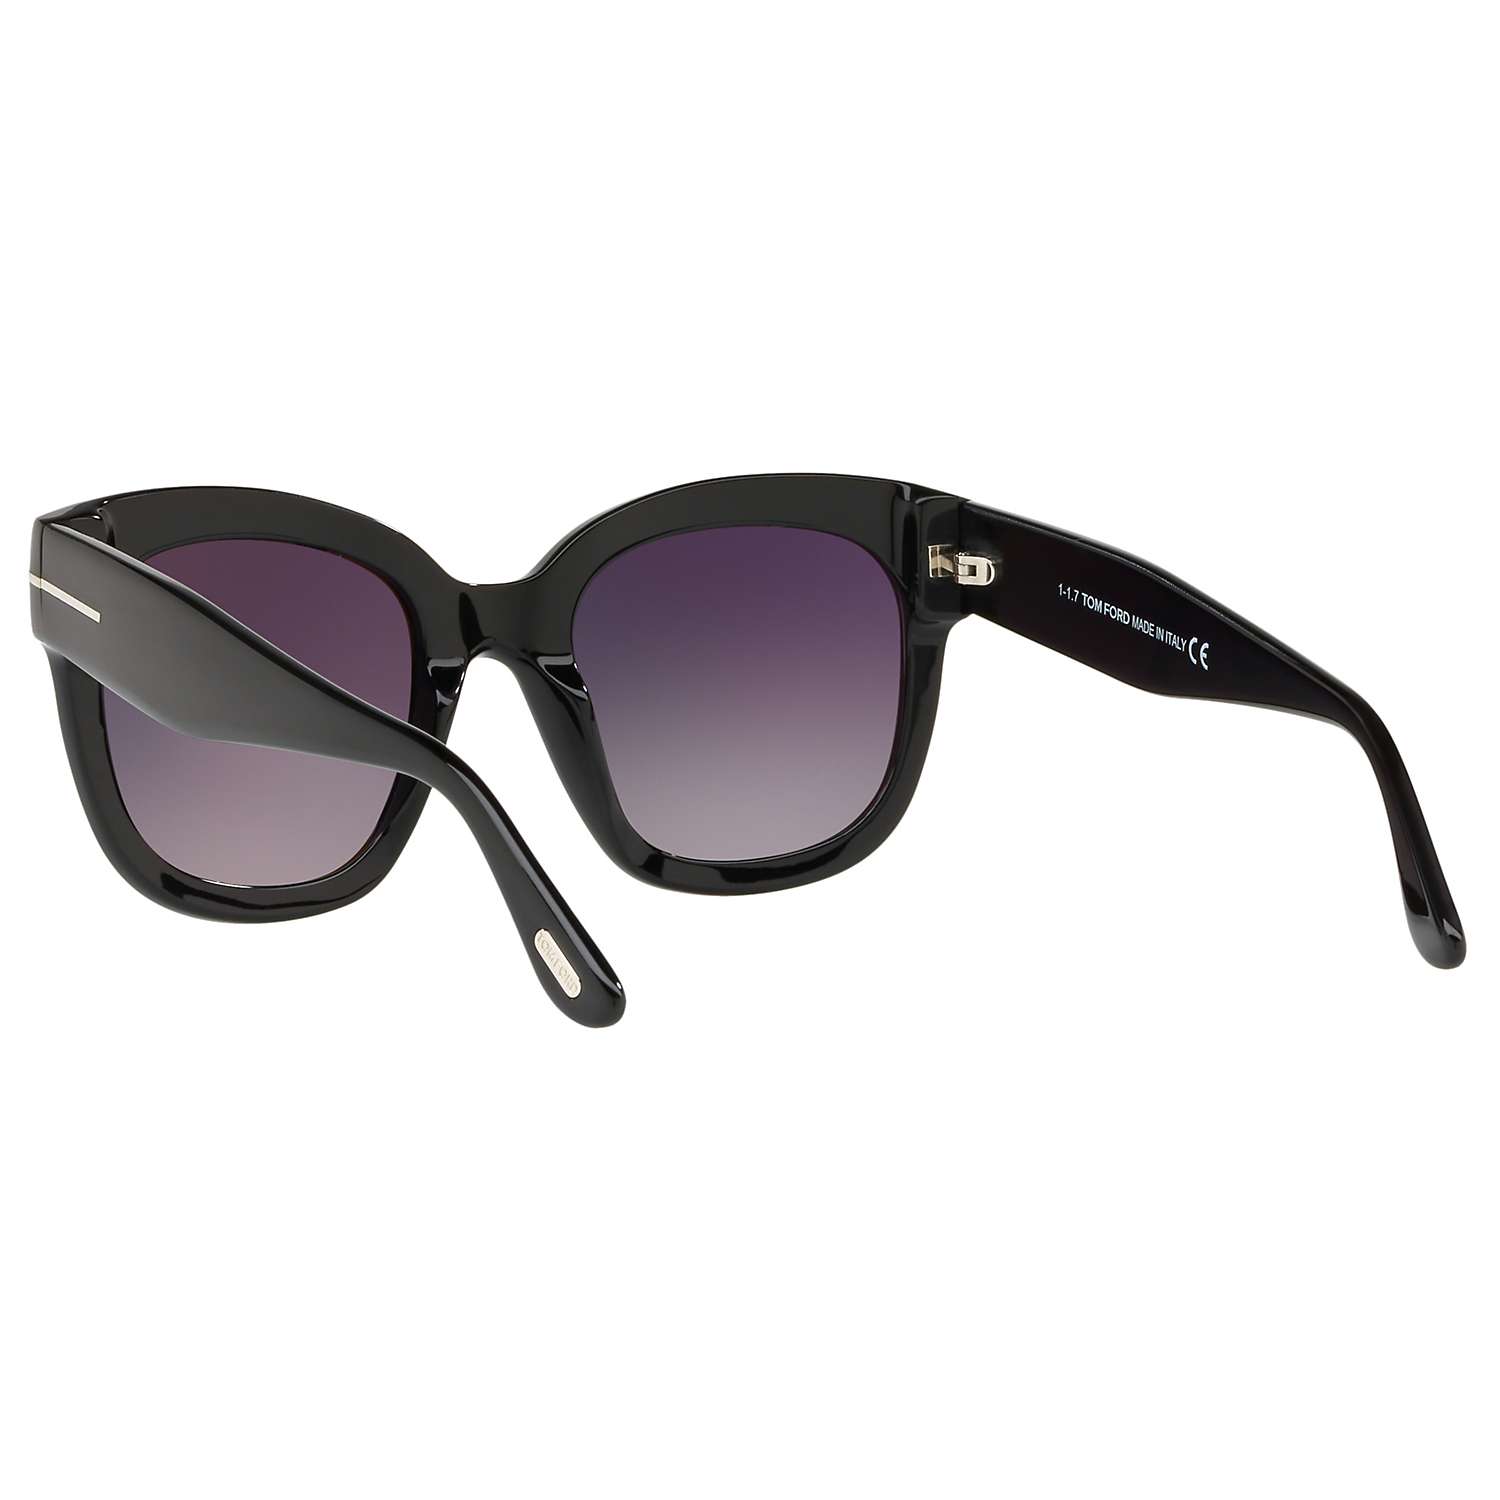 Buy TOM FORD FT0613 Women's Beatrix-02 Square Sunglasses, Matte Black/Mirror Grey Online at johnlewis.com